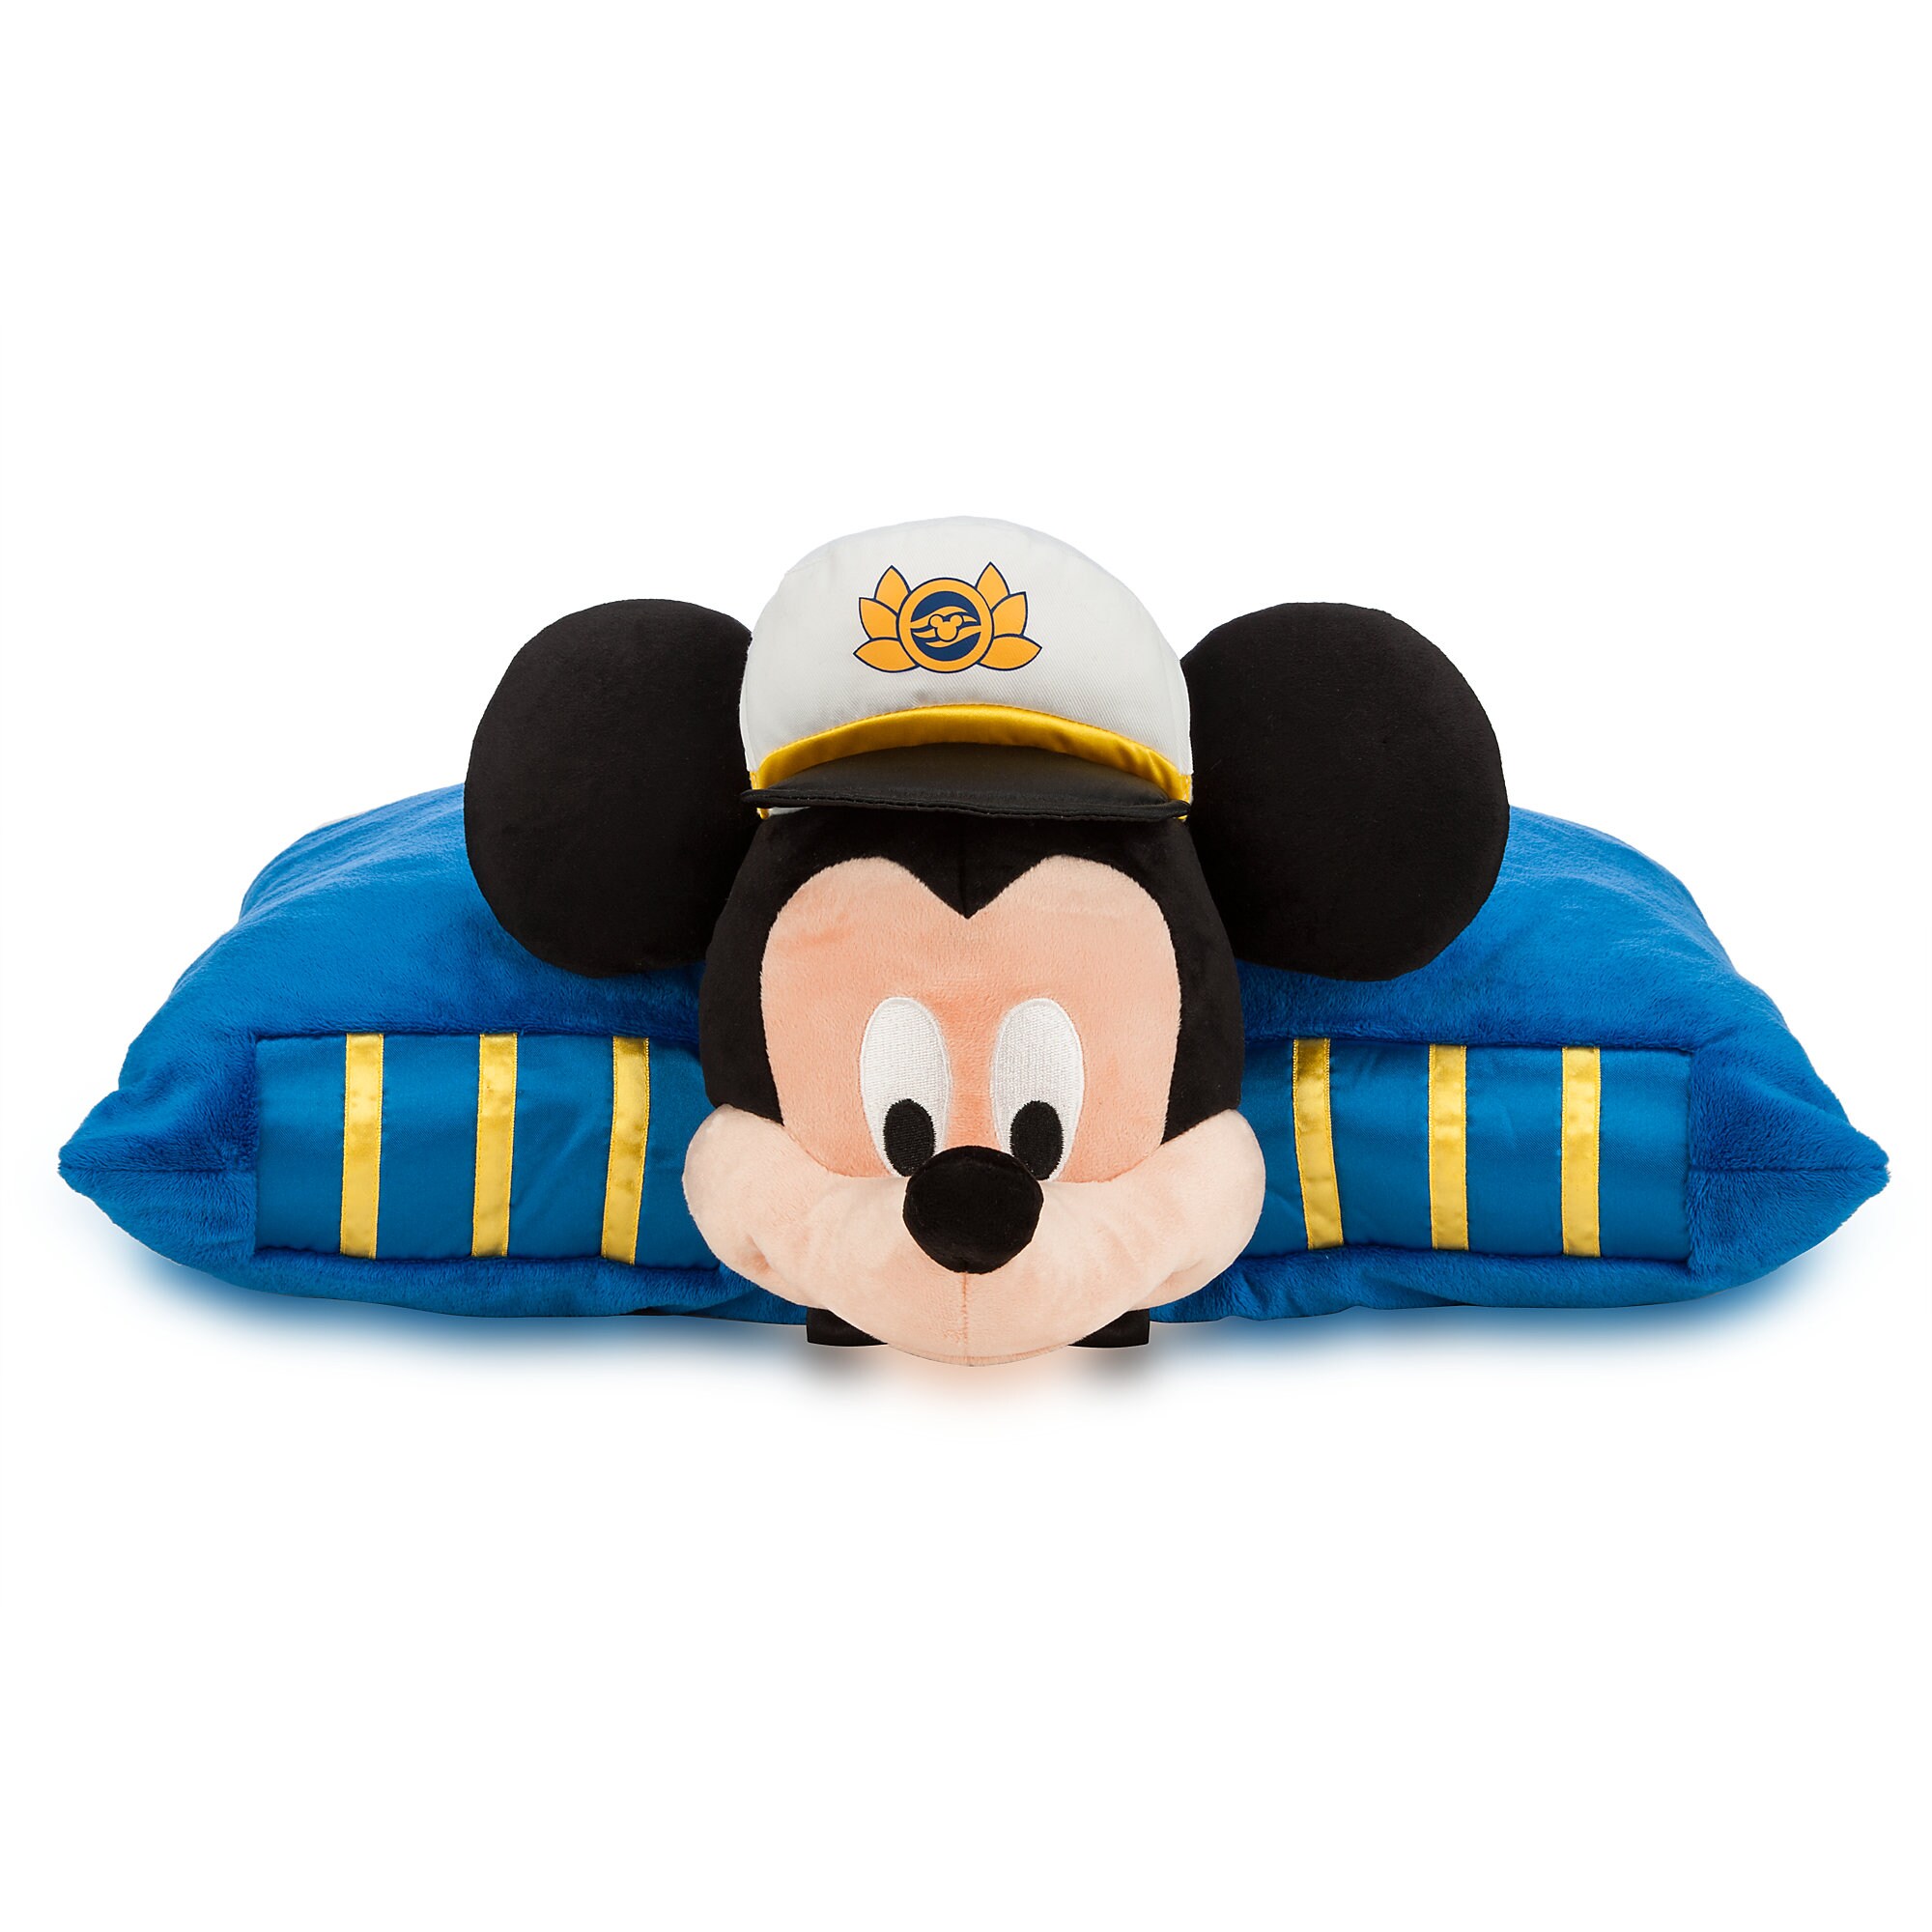 Mickey Mouse Pillow Plush - Disney Cruise line